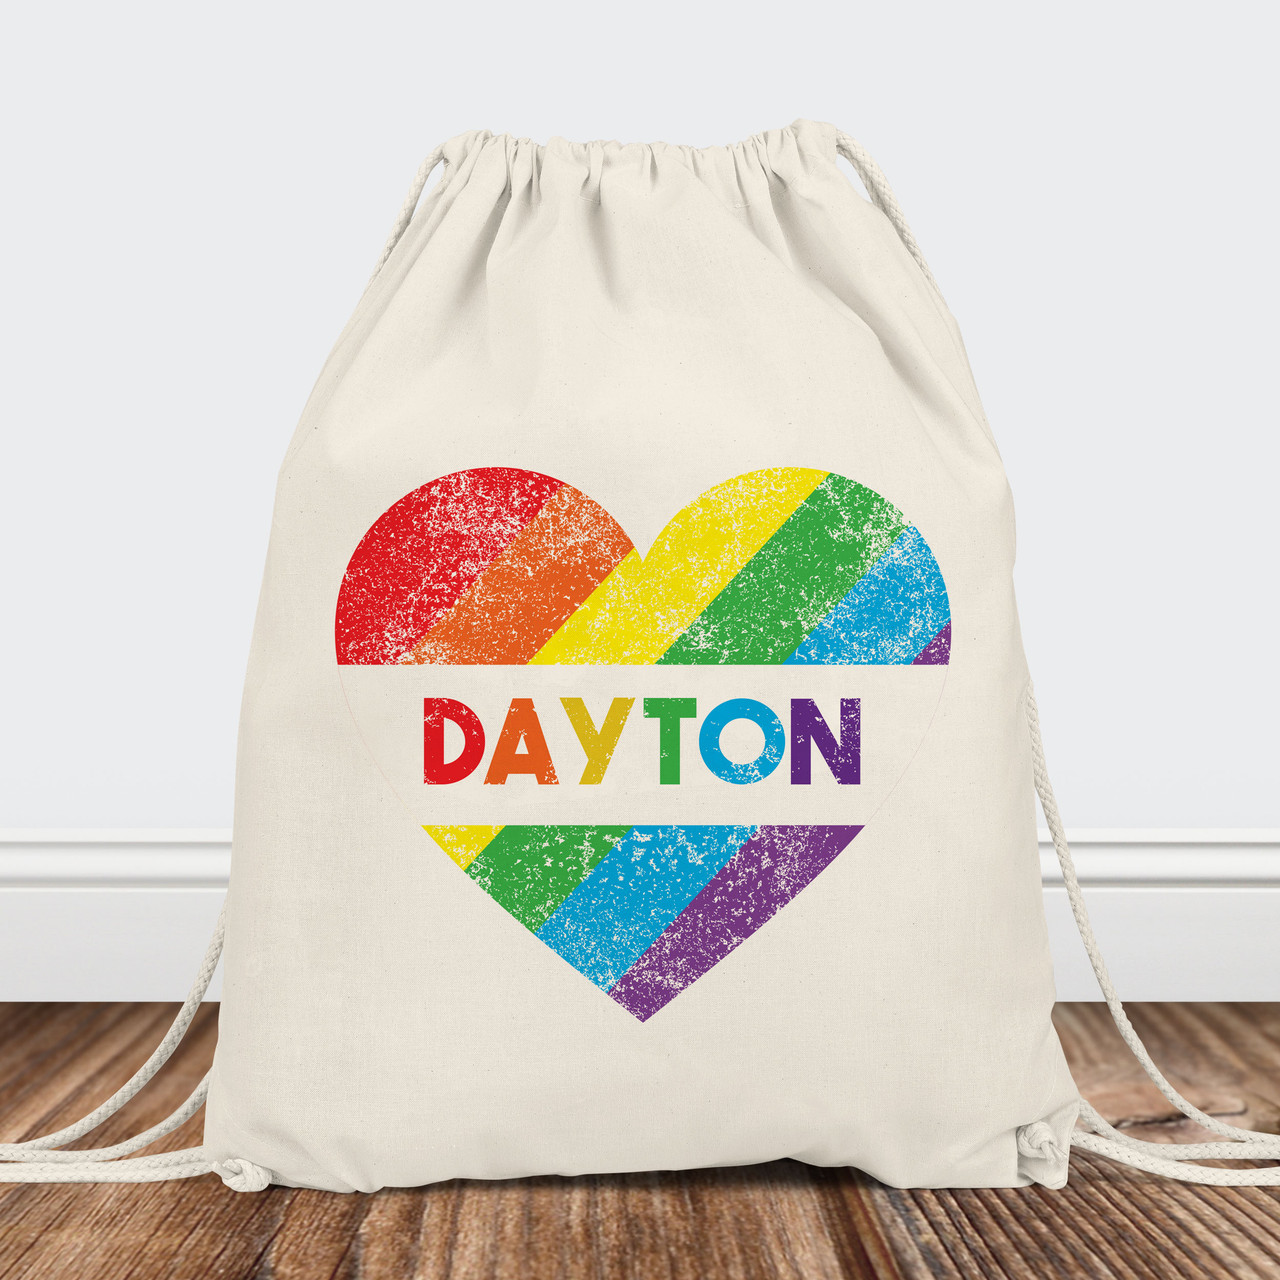 Love All, Gay Pride Tote Bag